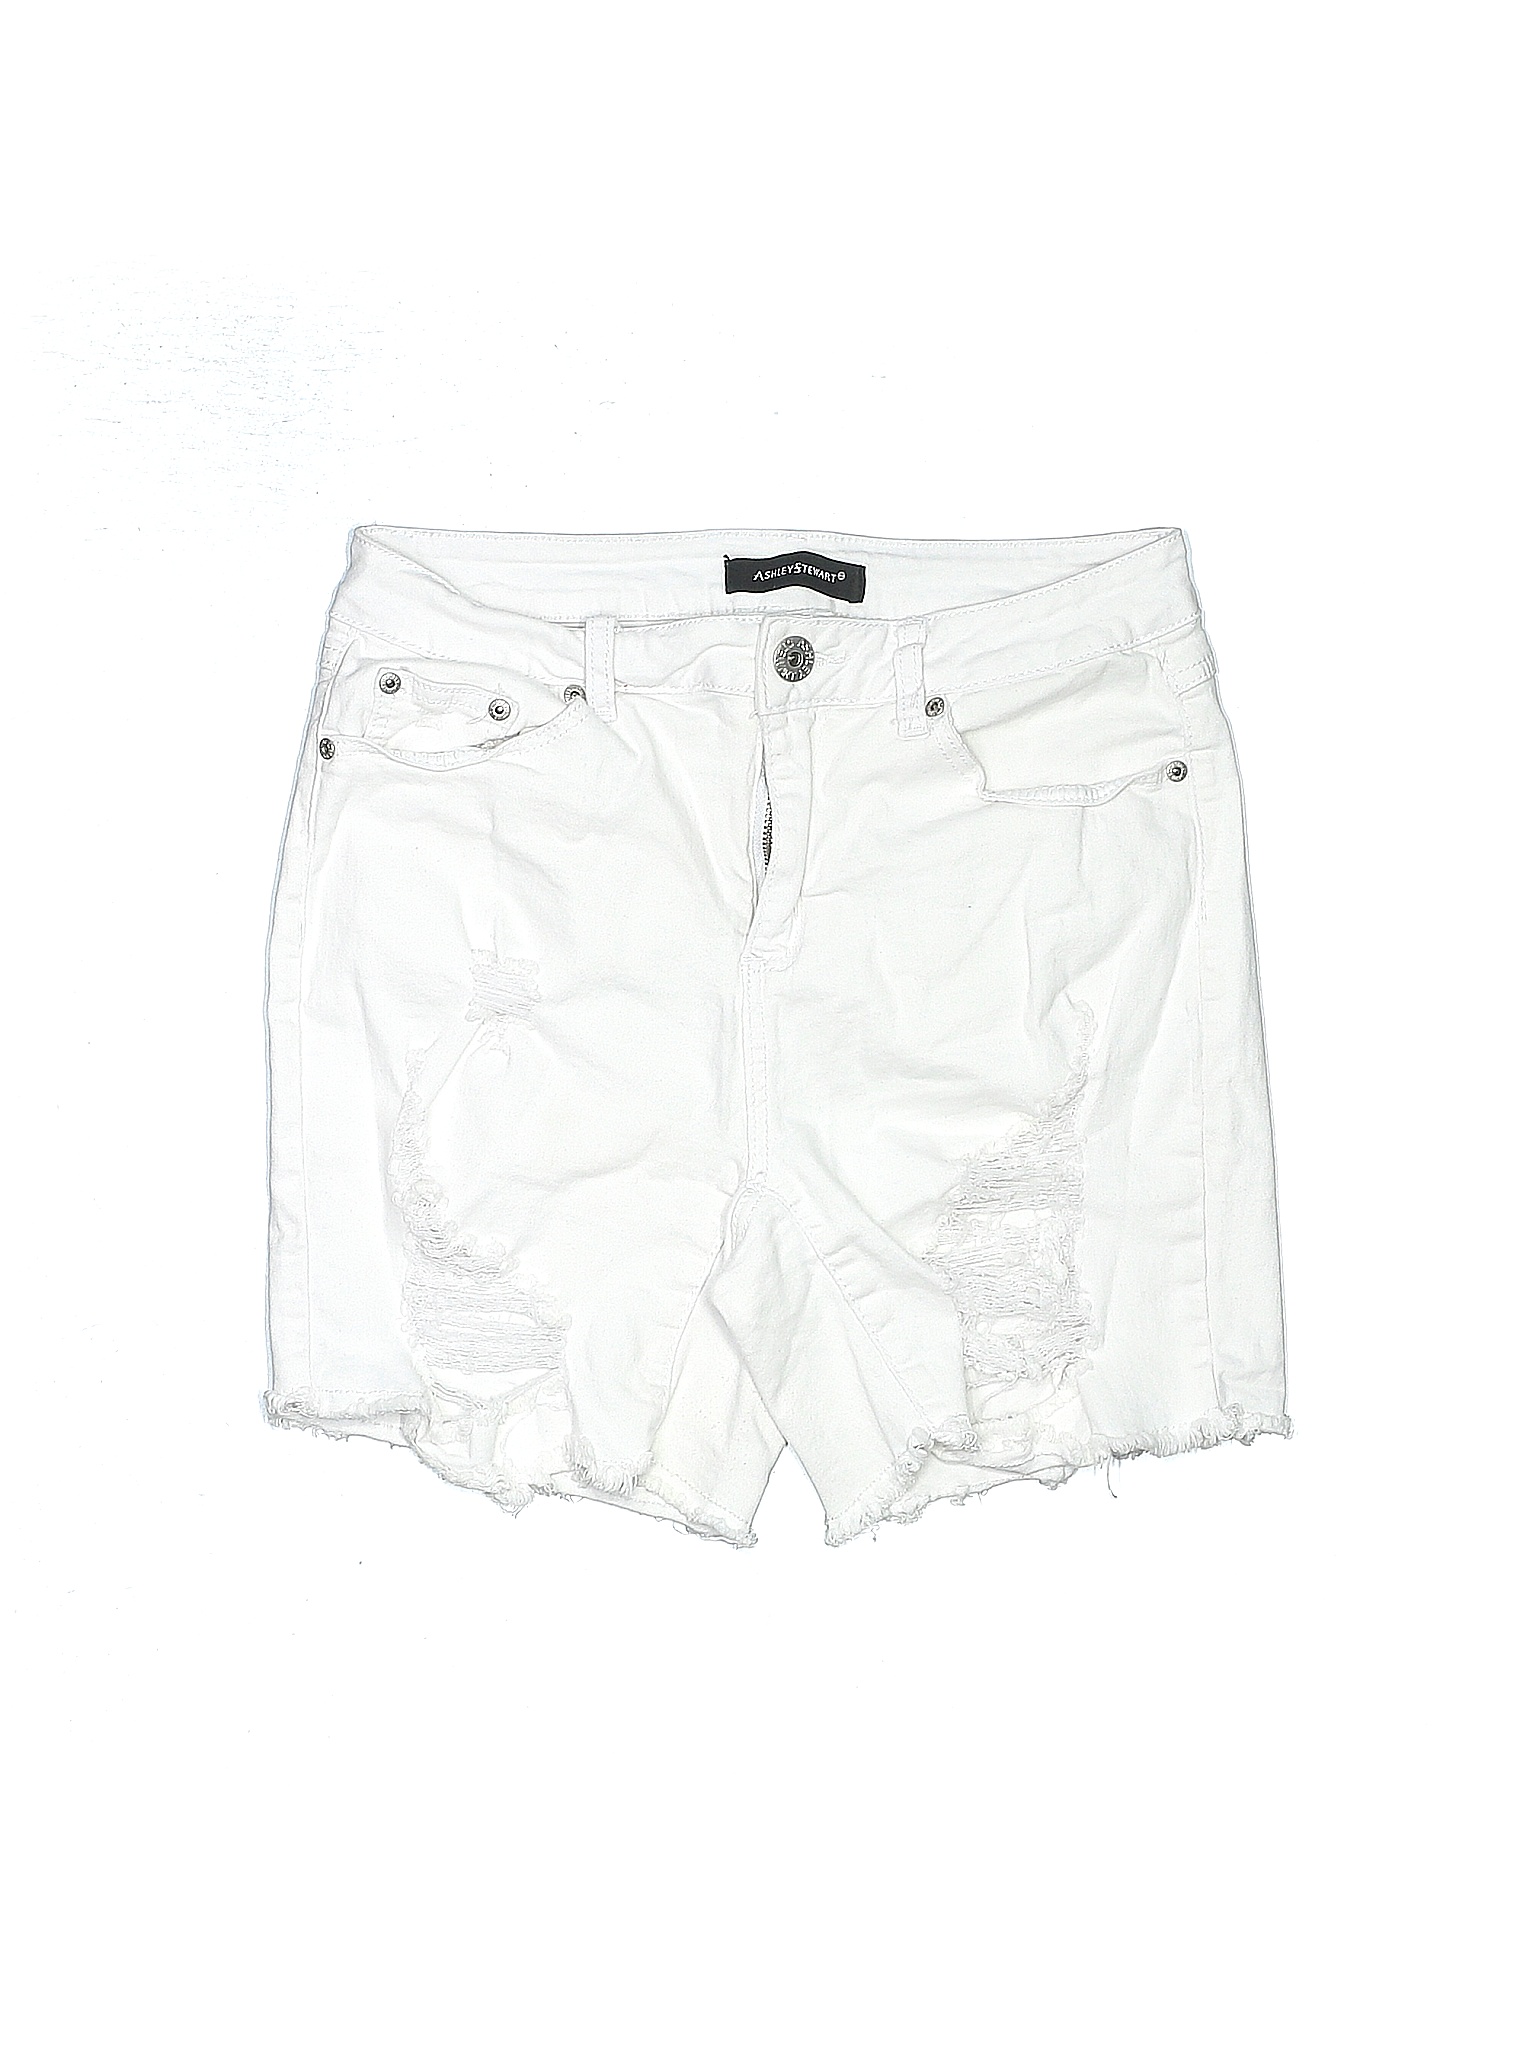 Ashley Stewart Solid White Denim Shorts Size 10 (Plus) - 66% off | thredUP